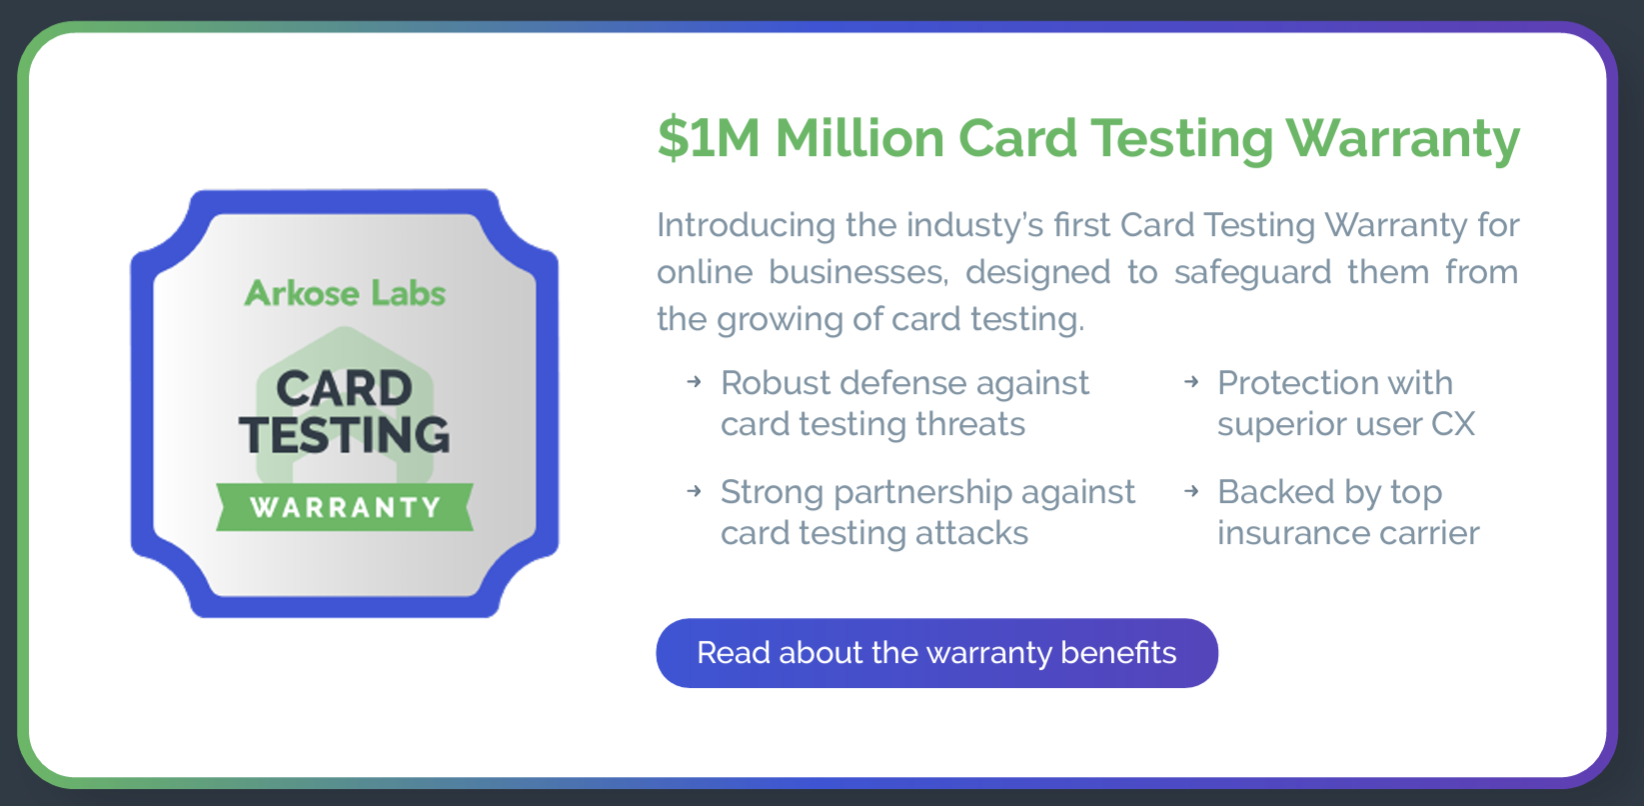 Arkose Labs’ card testing warranty